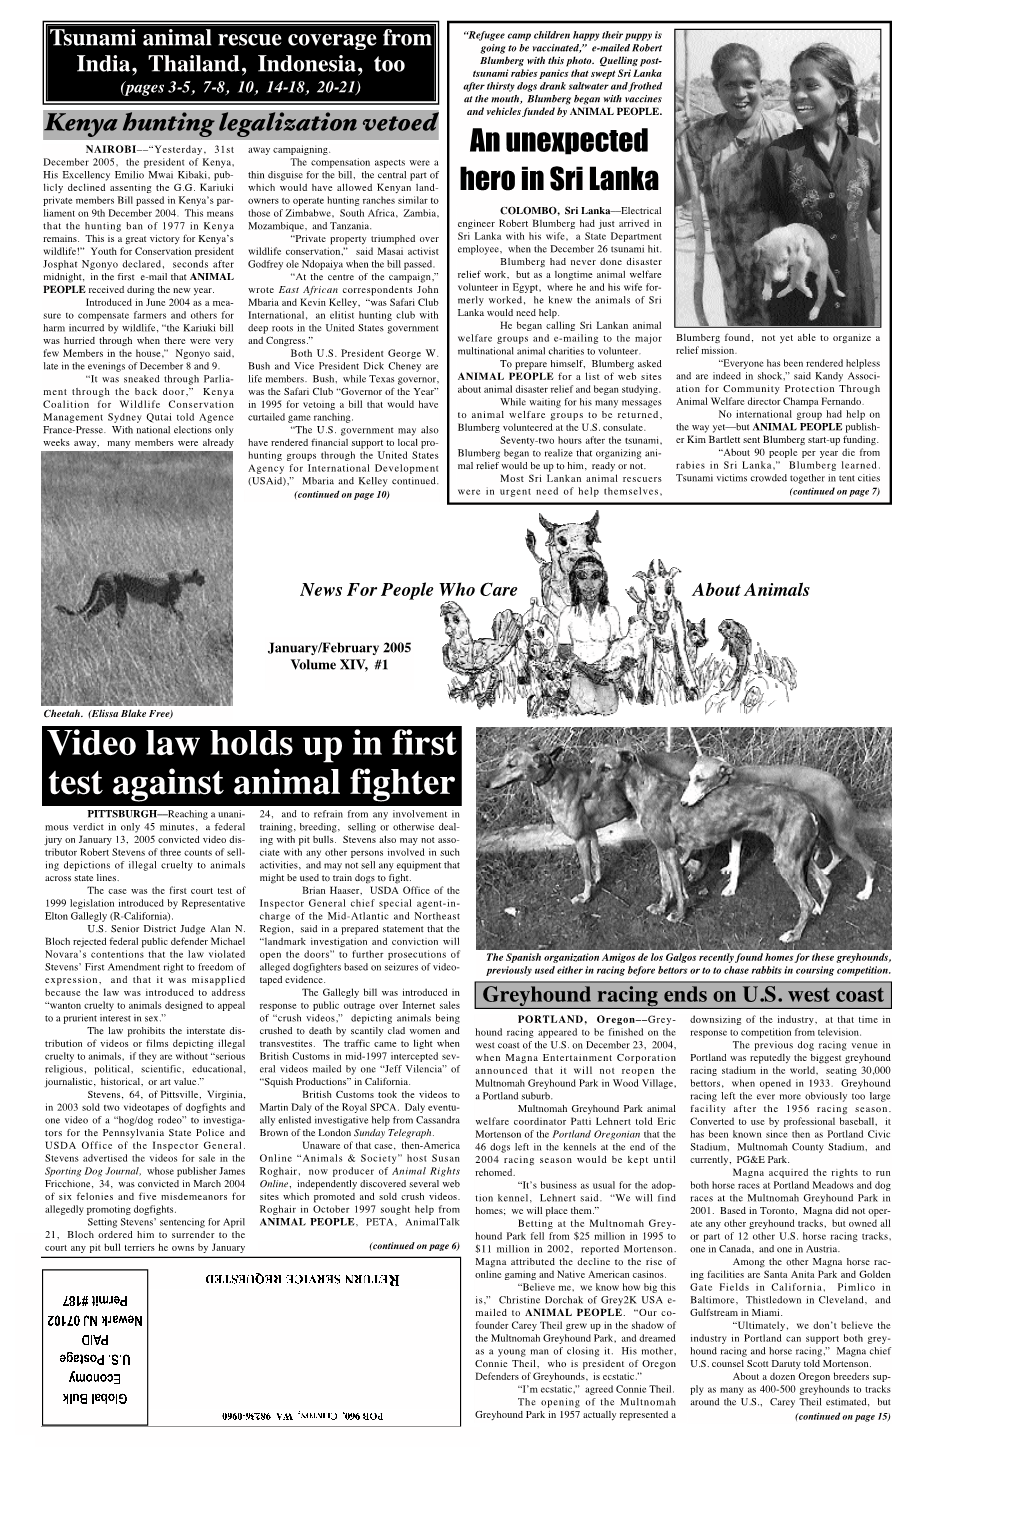 January/February 2005 Volume XIV, #1